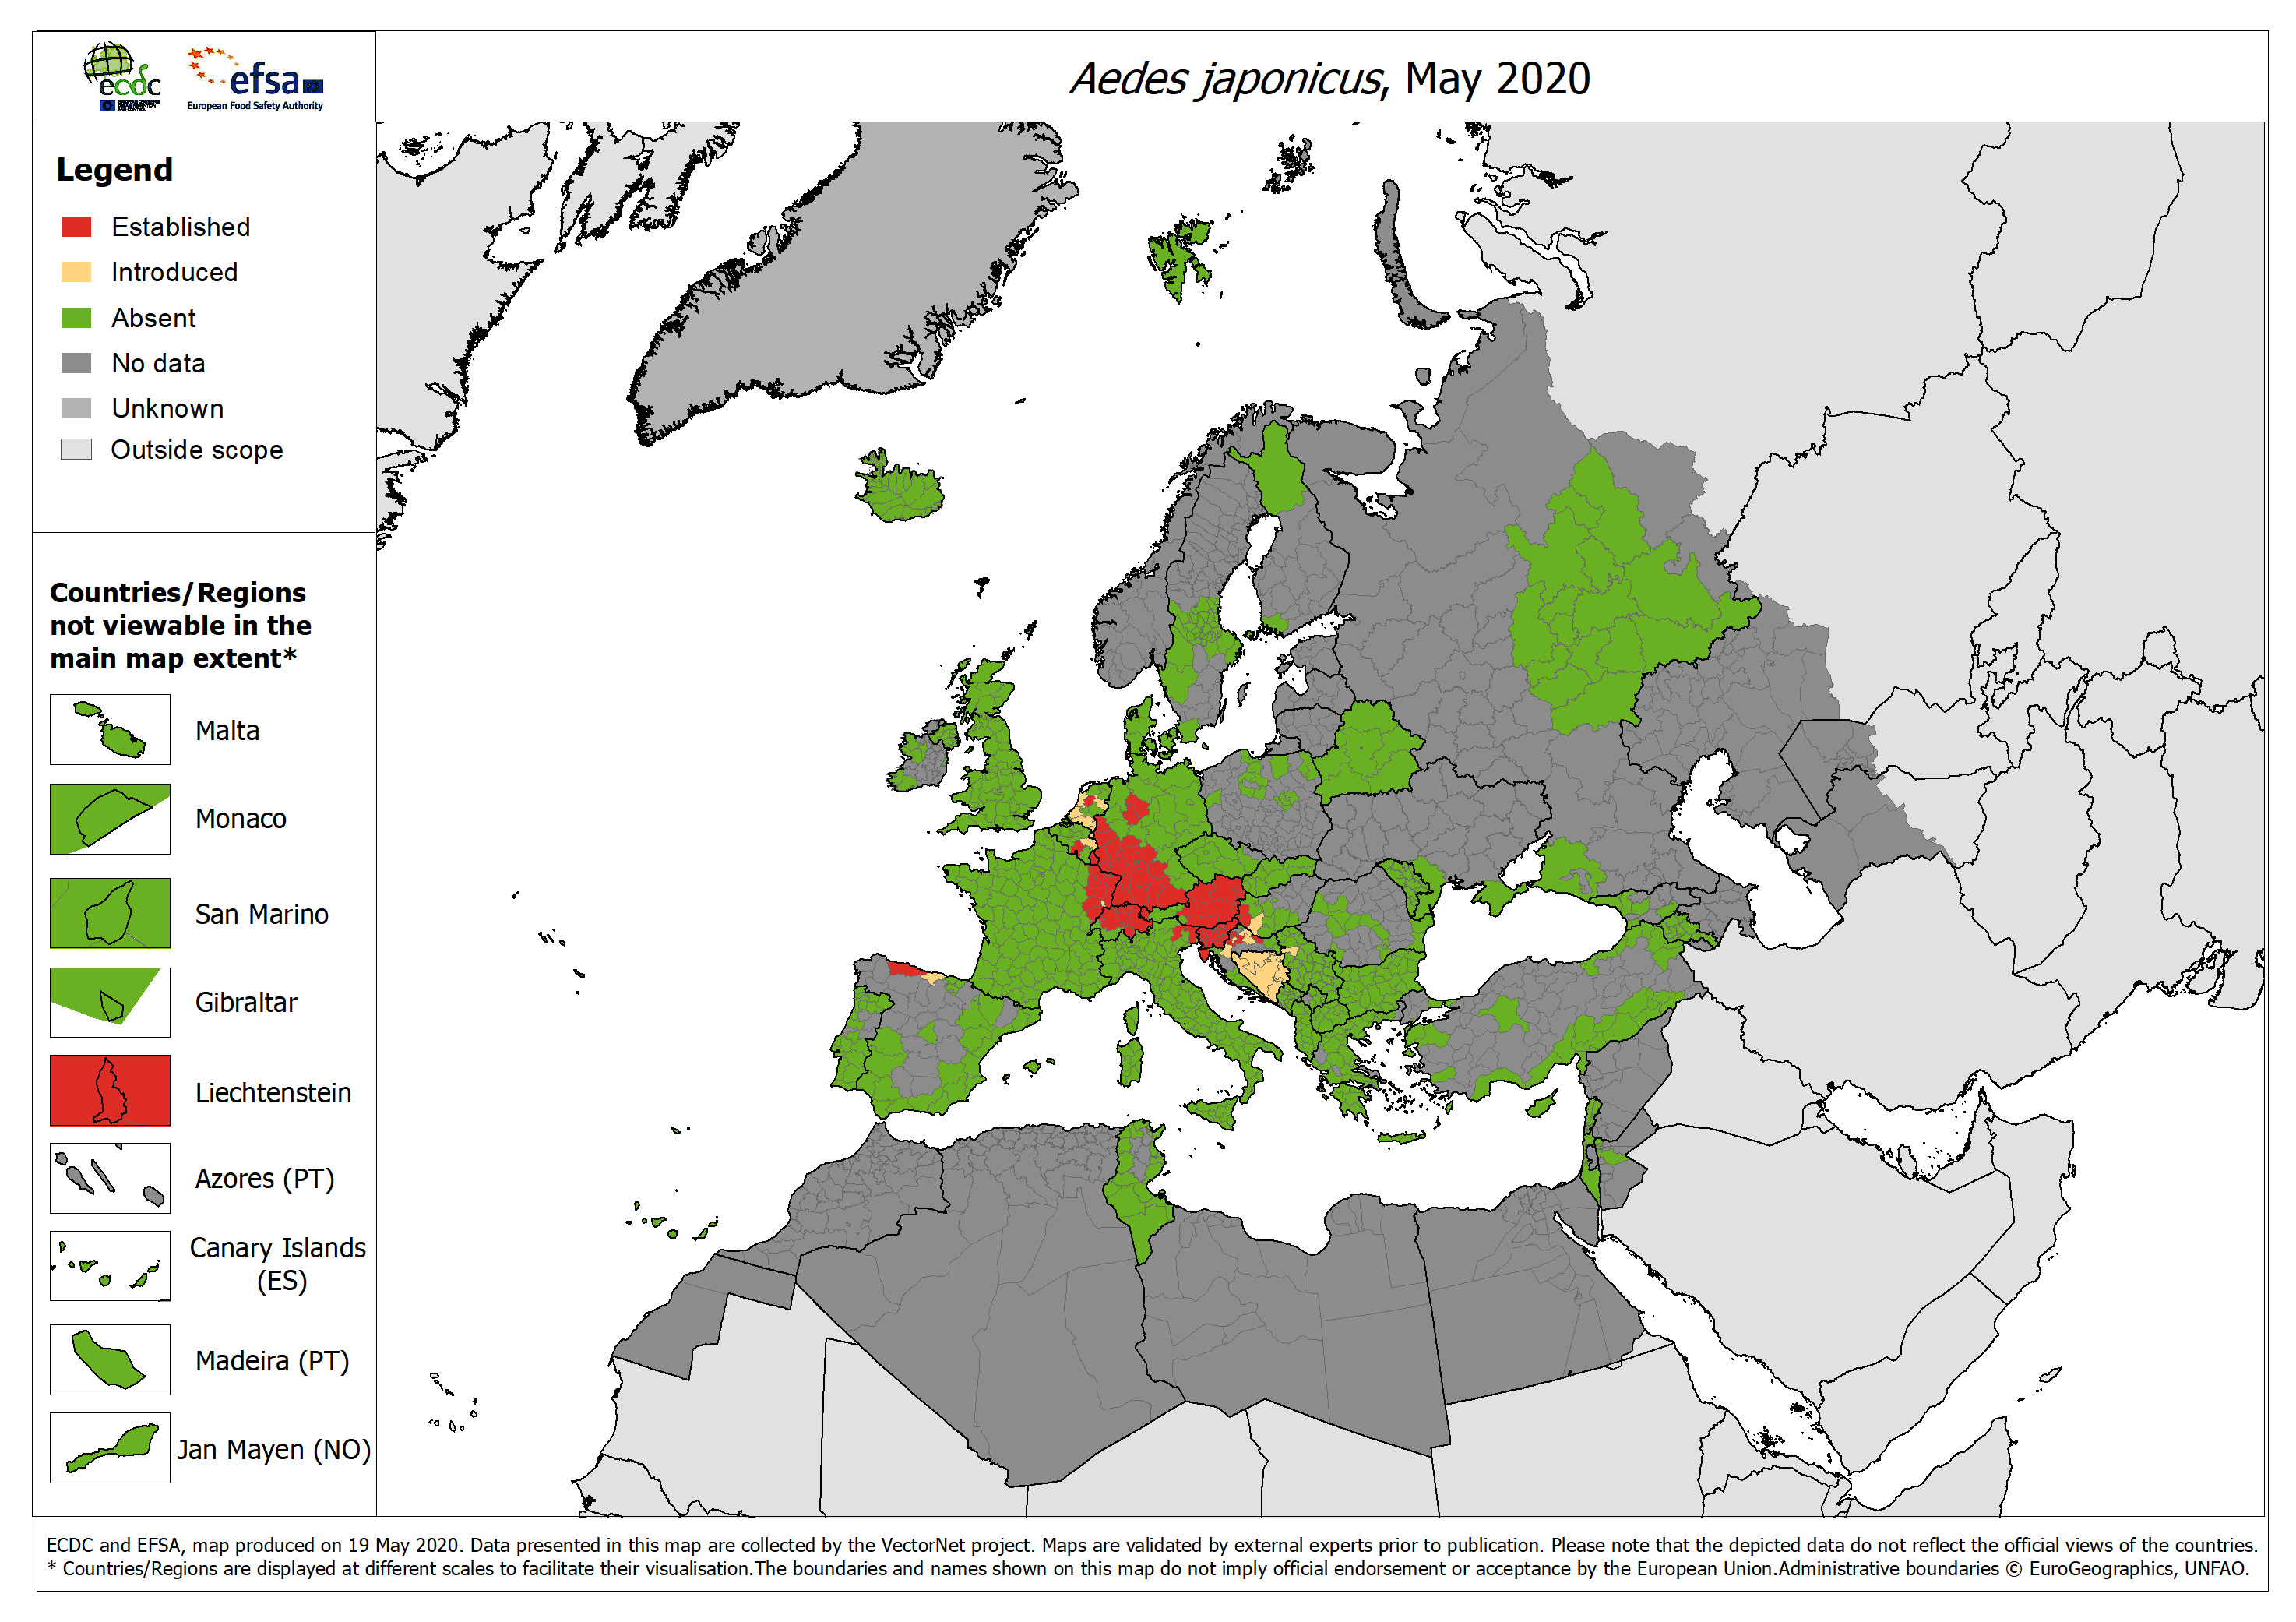 mapa europa mosquito aedes japonicus septirmbre 2020